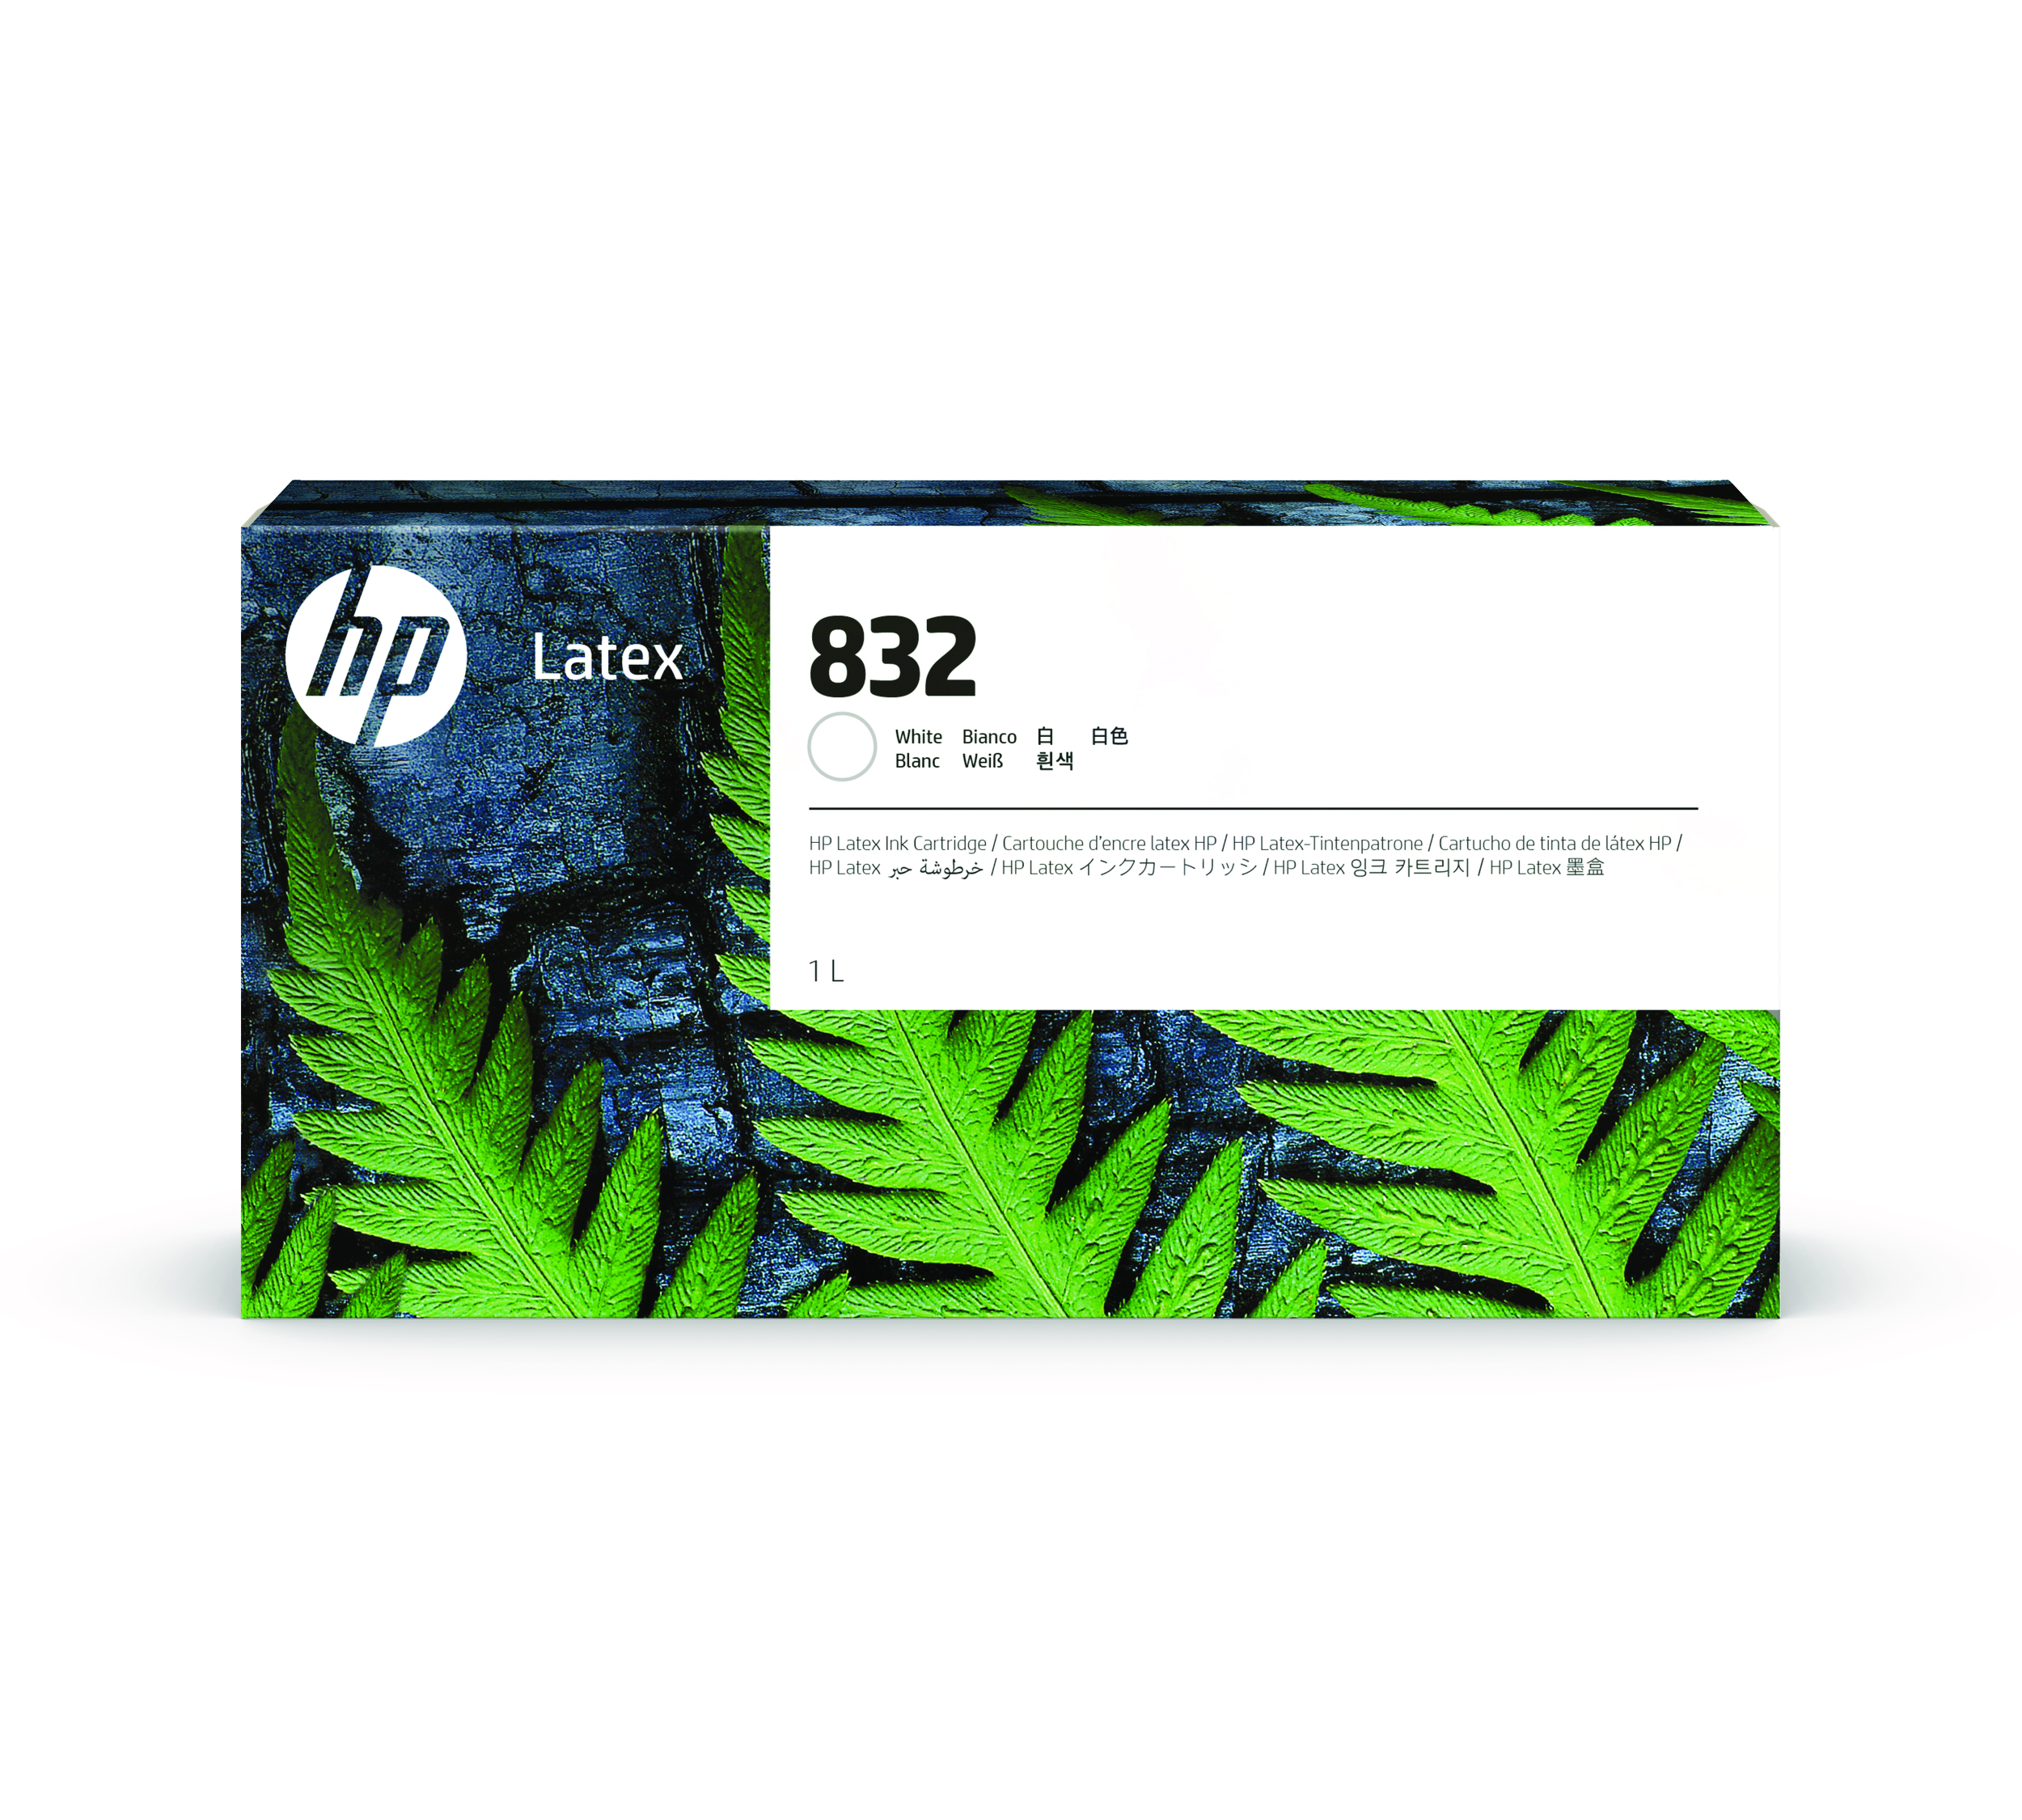 HP 832 Latex Tinte weiß - 1 Liter